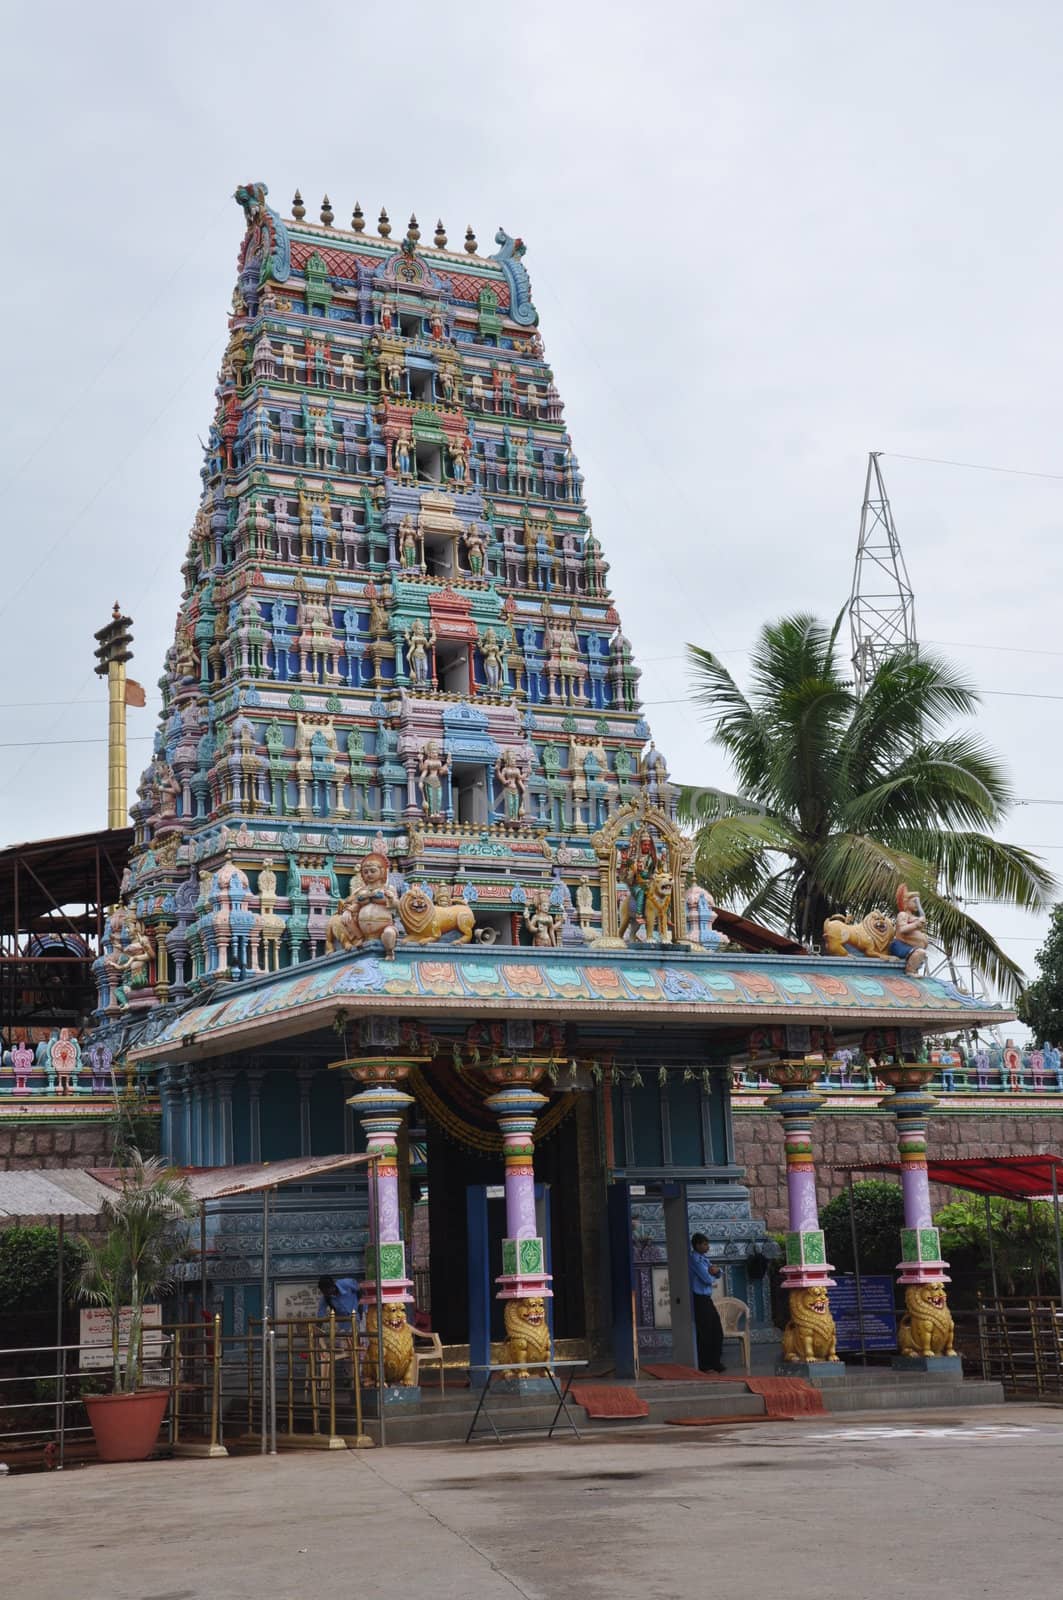 Pedamma Temple in Hyderabad, India by sainaniritu